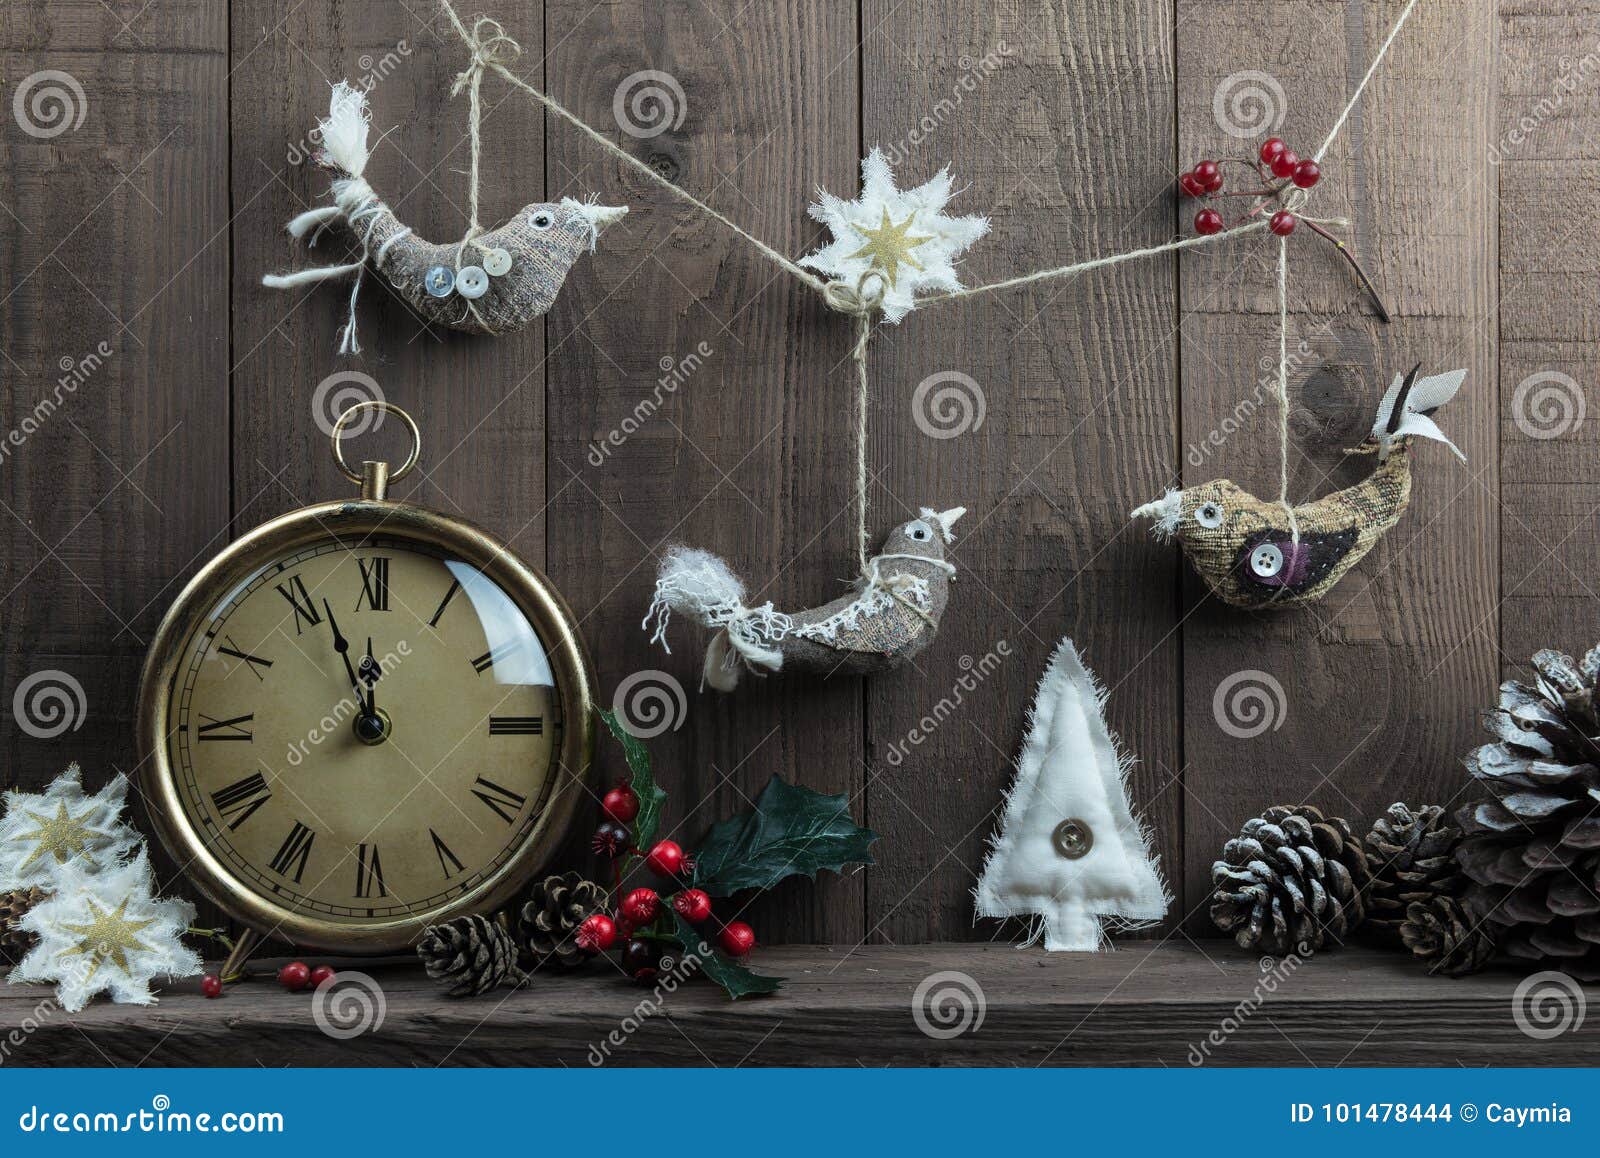 Christmas ornaments handmade nostalgic clocks